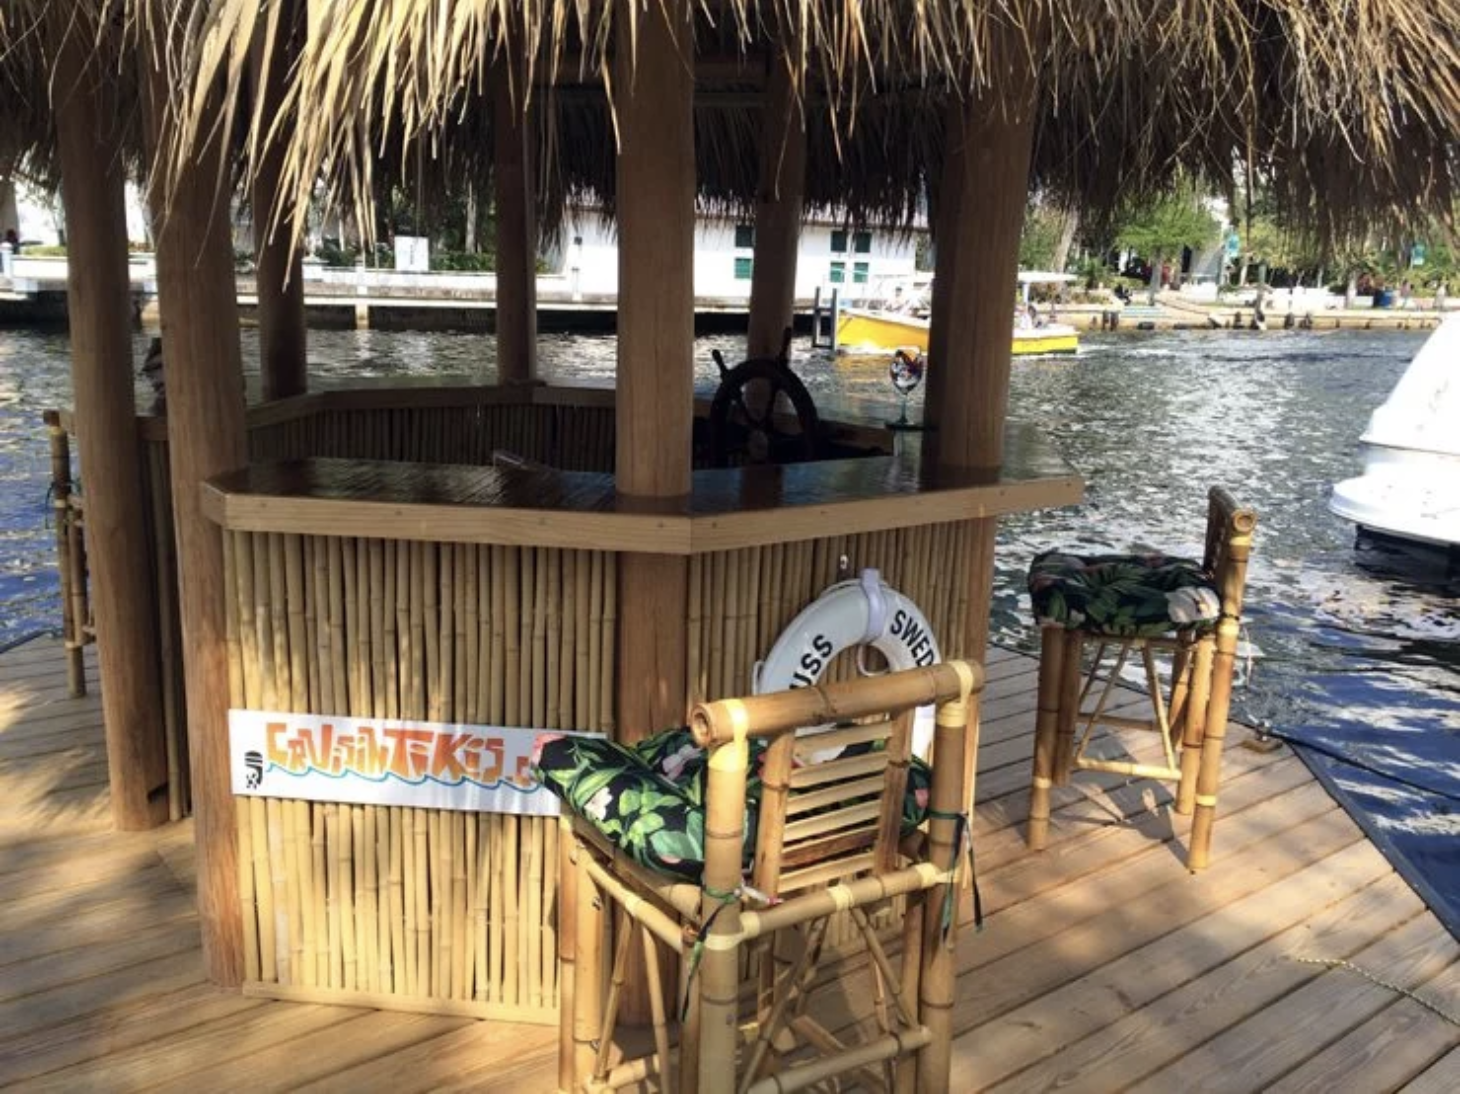 Bar tiki margaritaville trinidad frontgate outdoor decor bars pool zoom stools visit